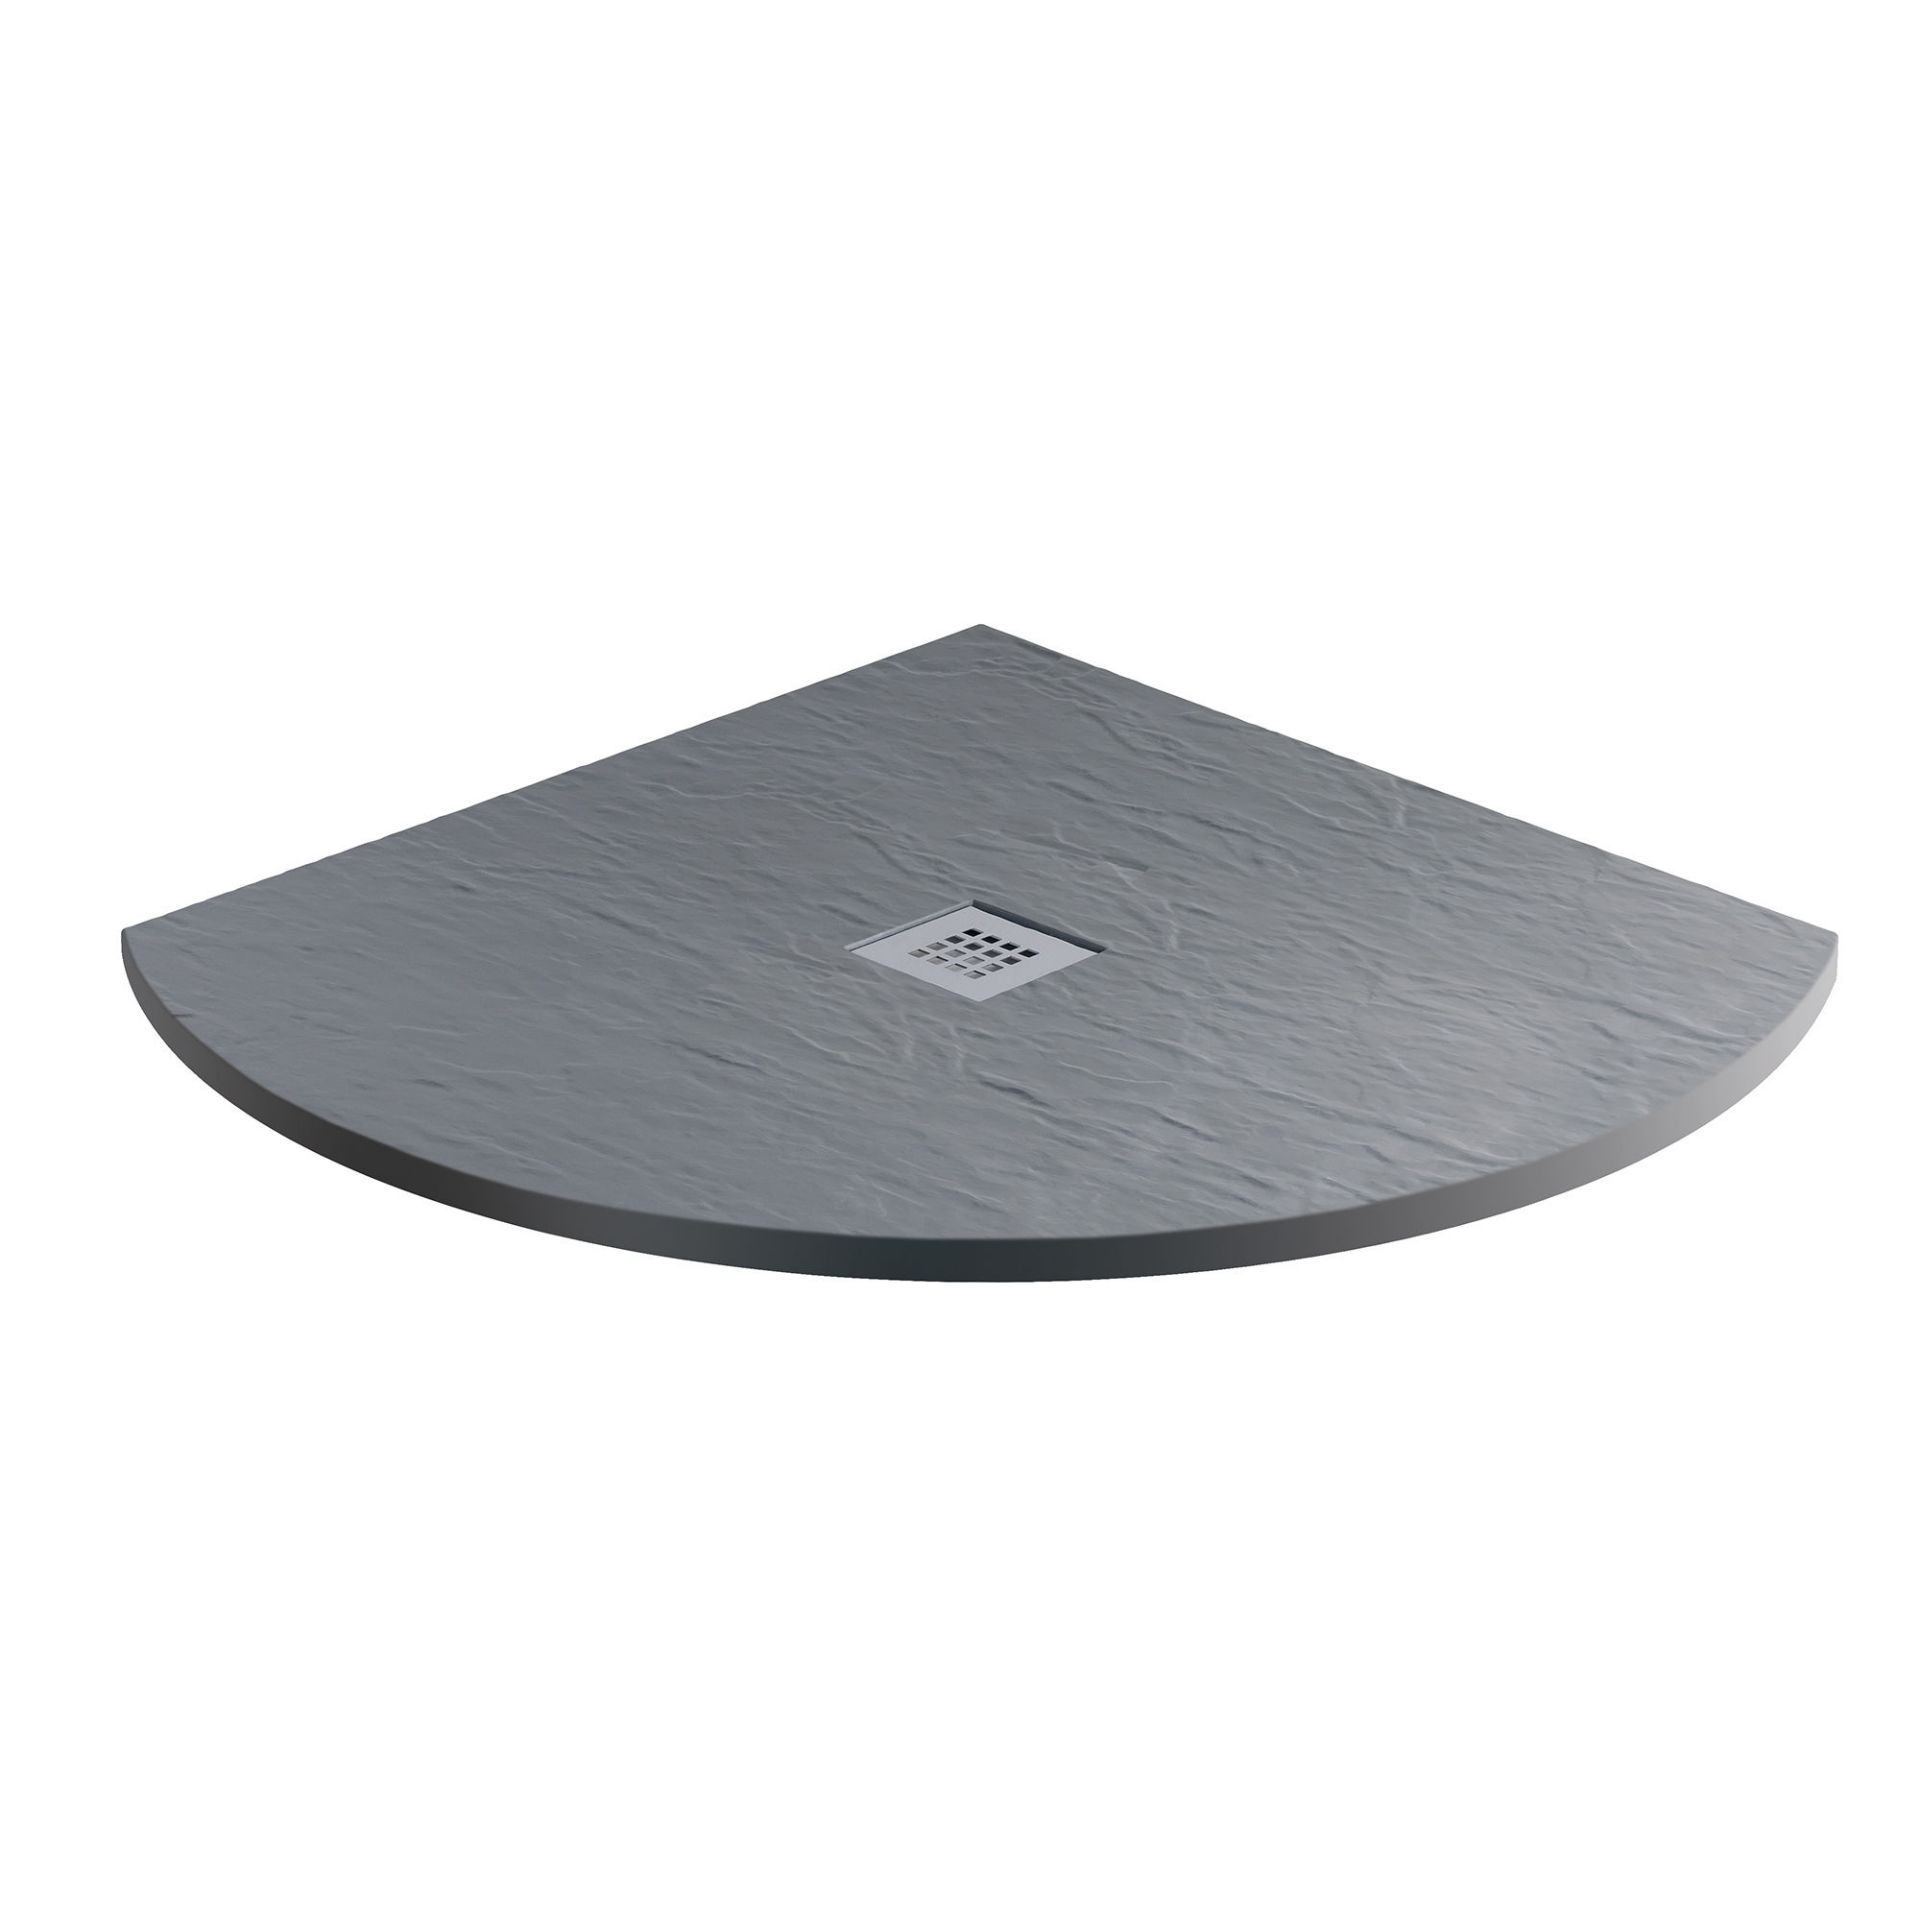 (CS114) 900x900mm Quadrant Slate Effect Shower Tray in Grey & Chrome Waste. RRP £153.99.